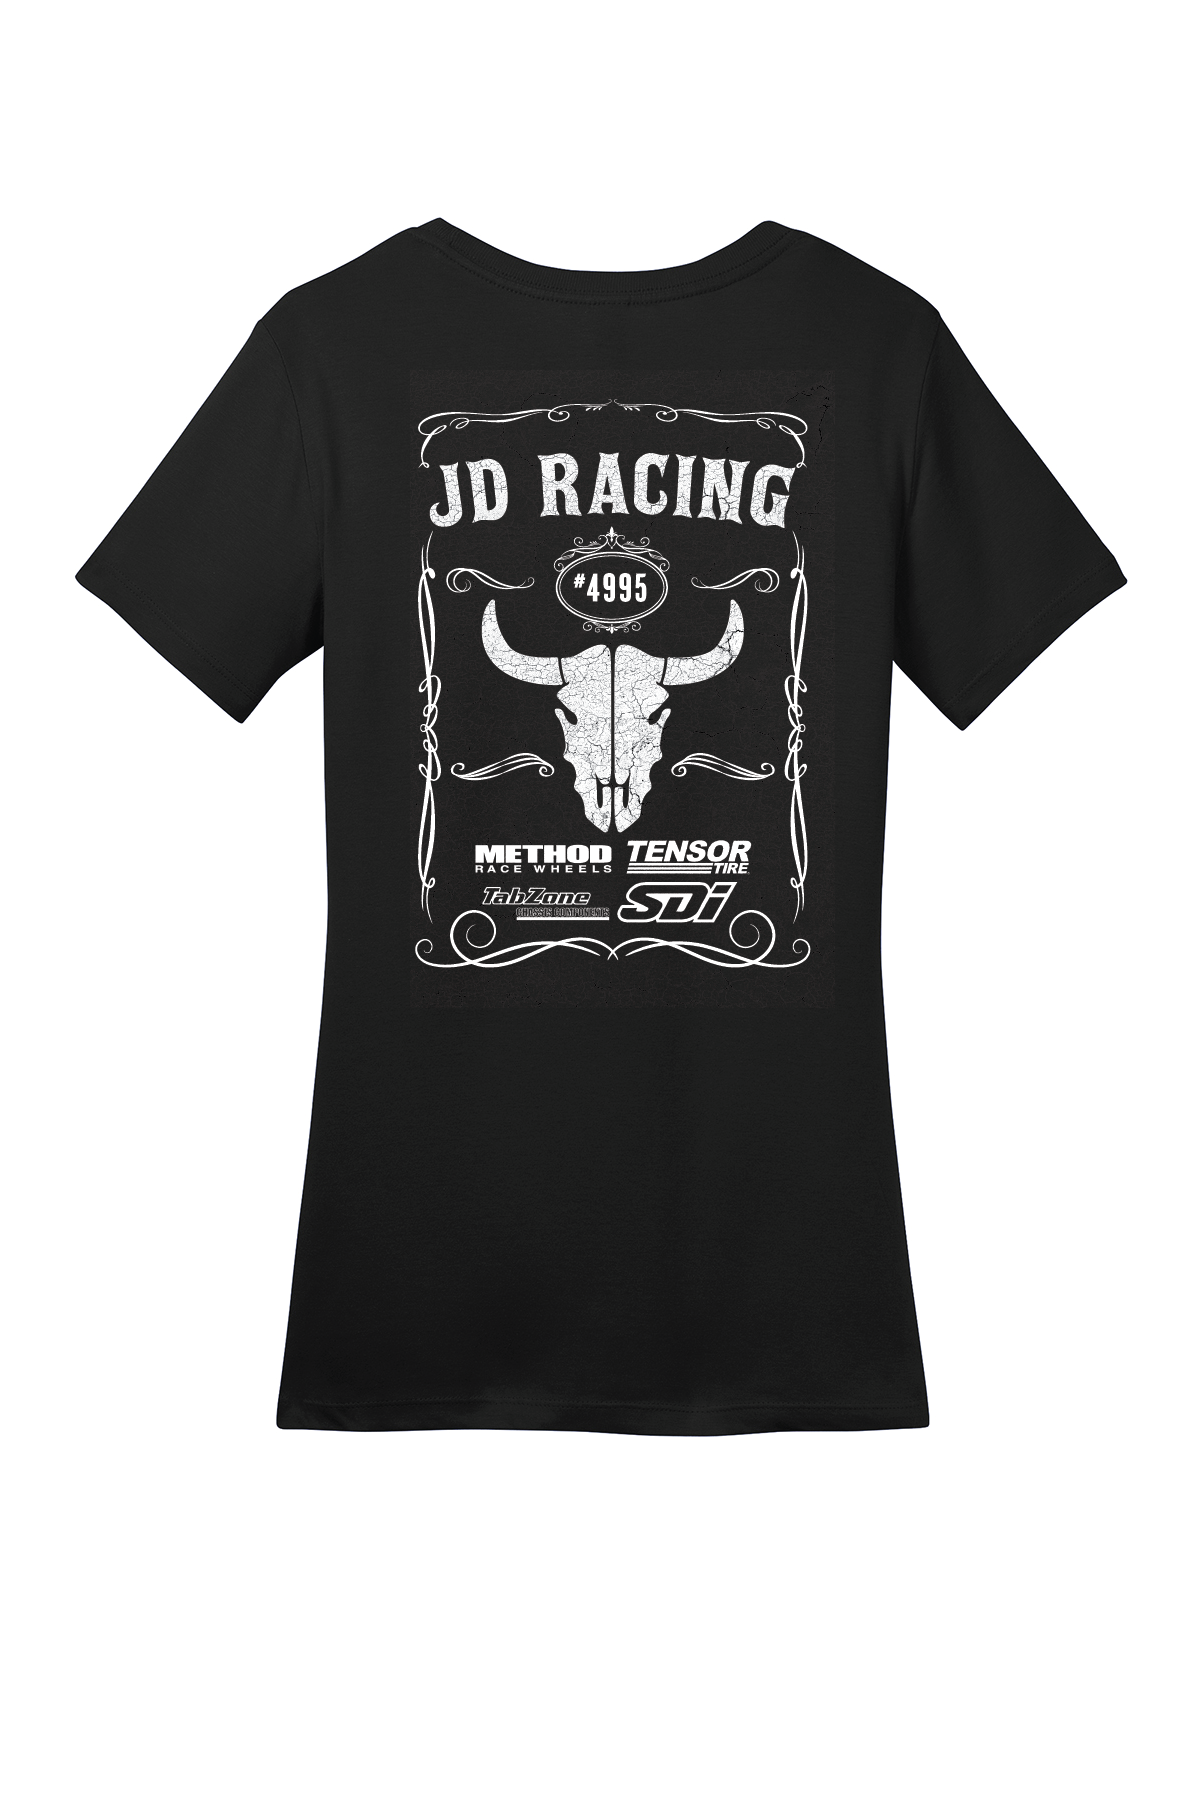 Team JD Racing  #4995